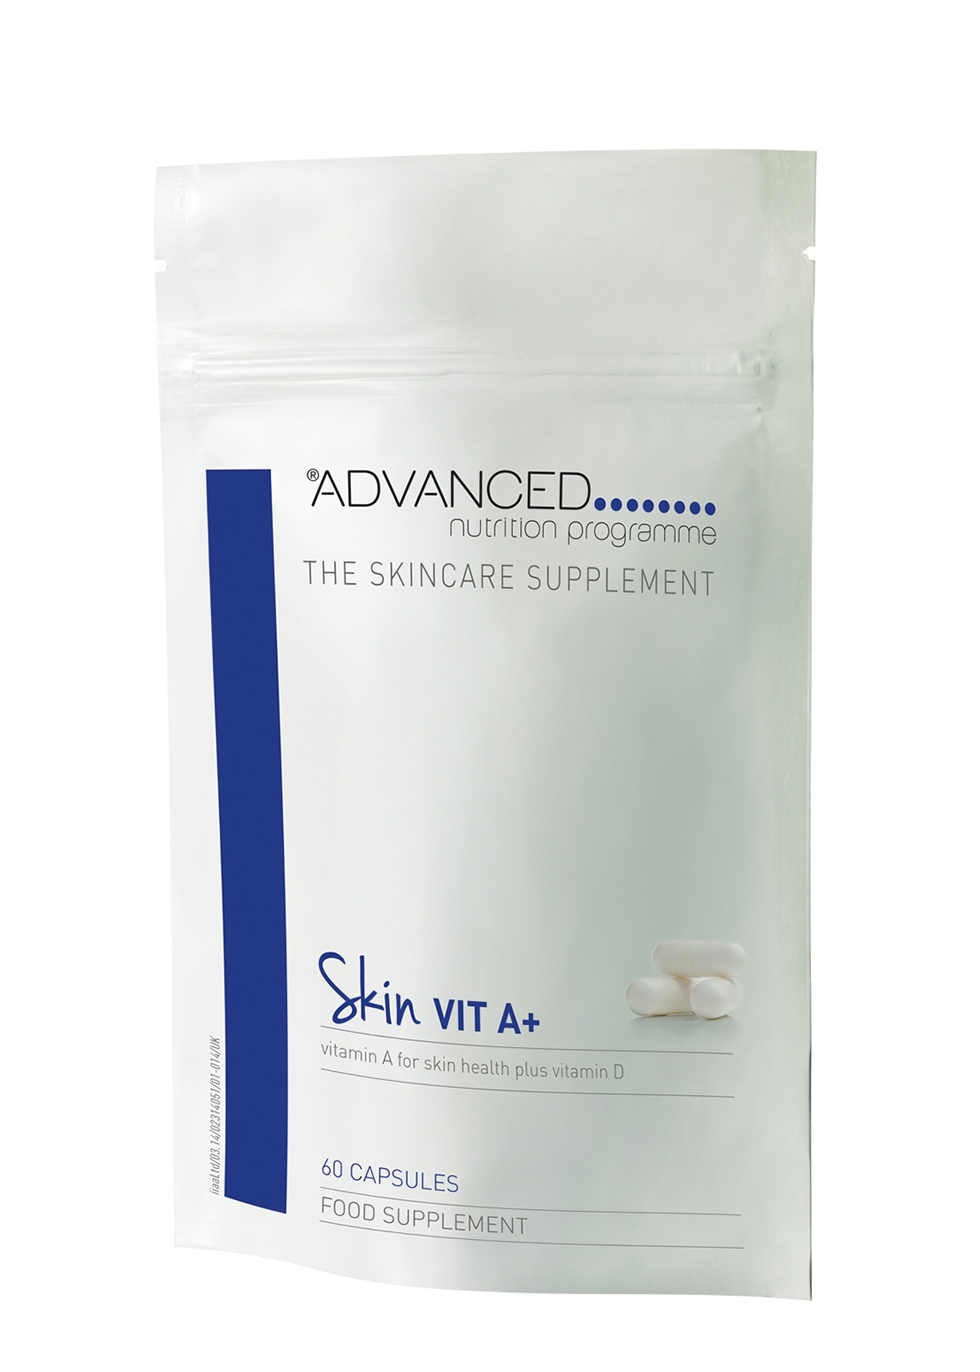 Advanced Nutrition Programme Skin Vitamin A+ - 60 Capsules - Harvey Nichols